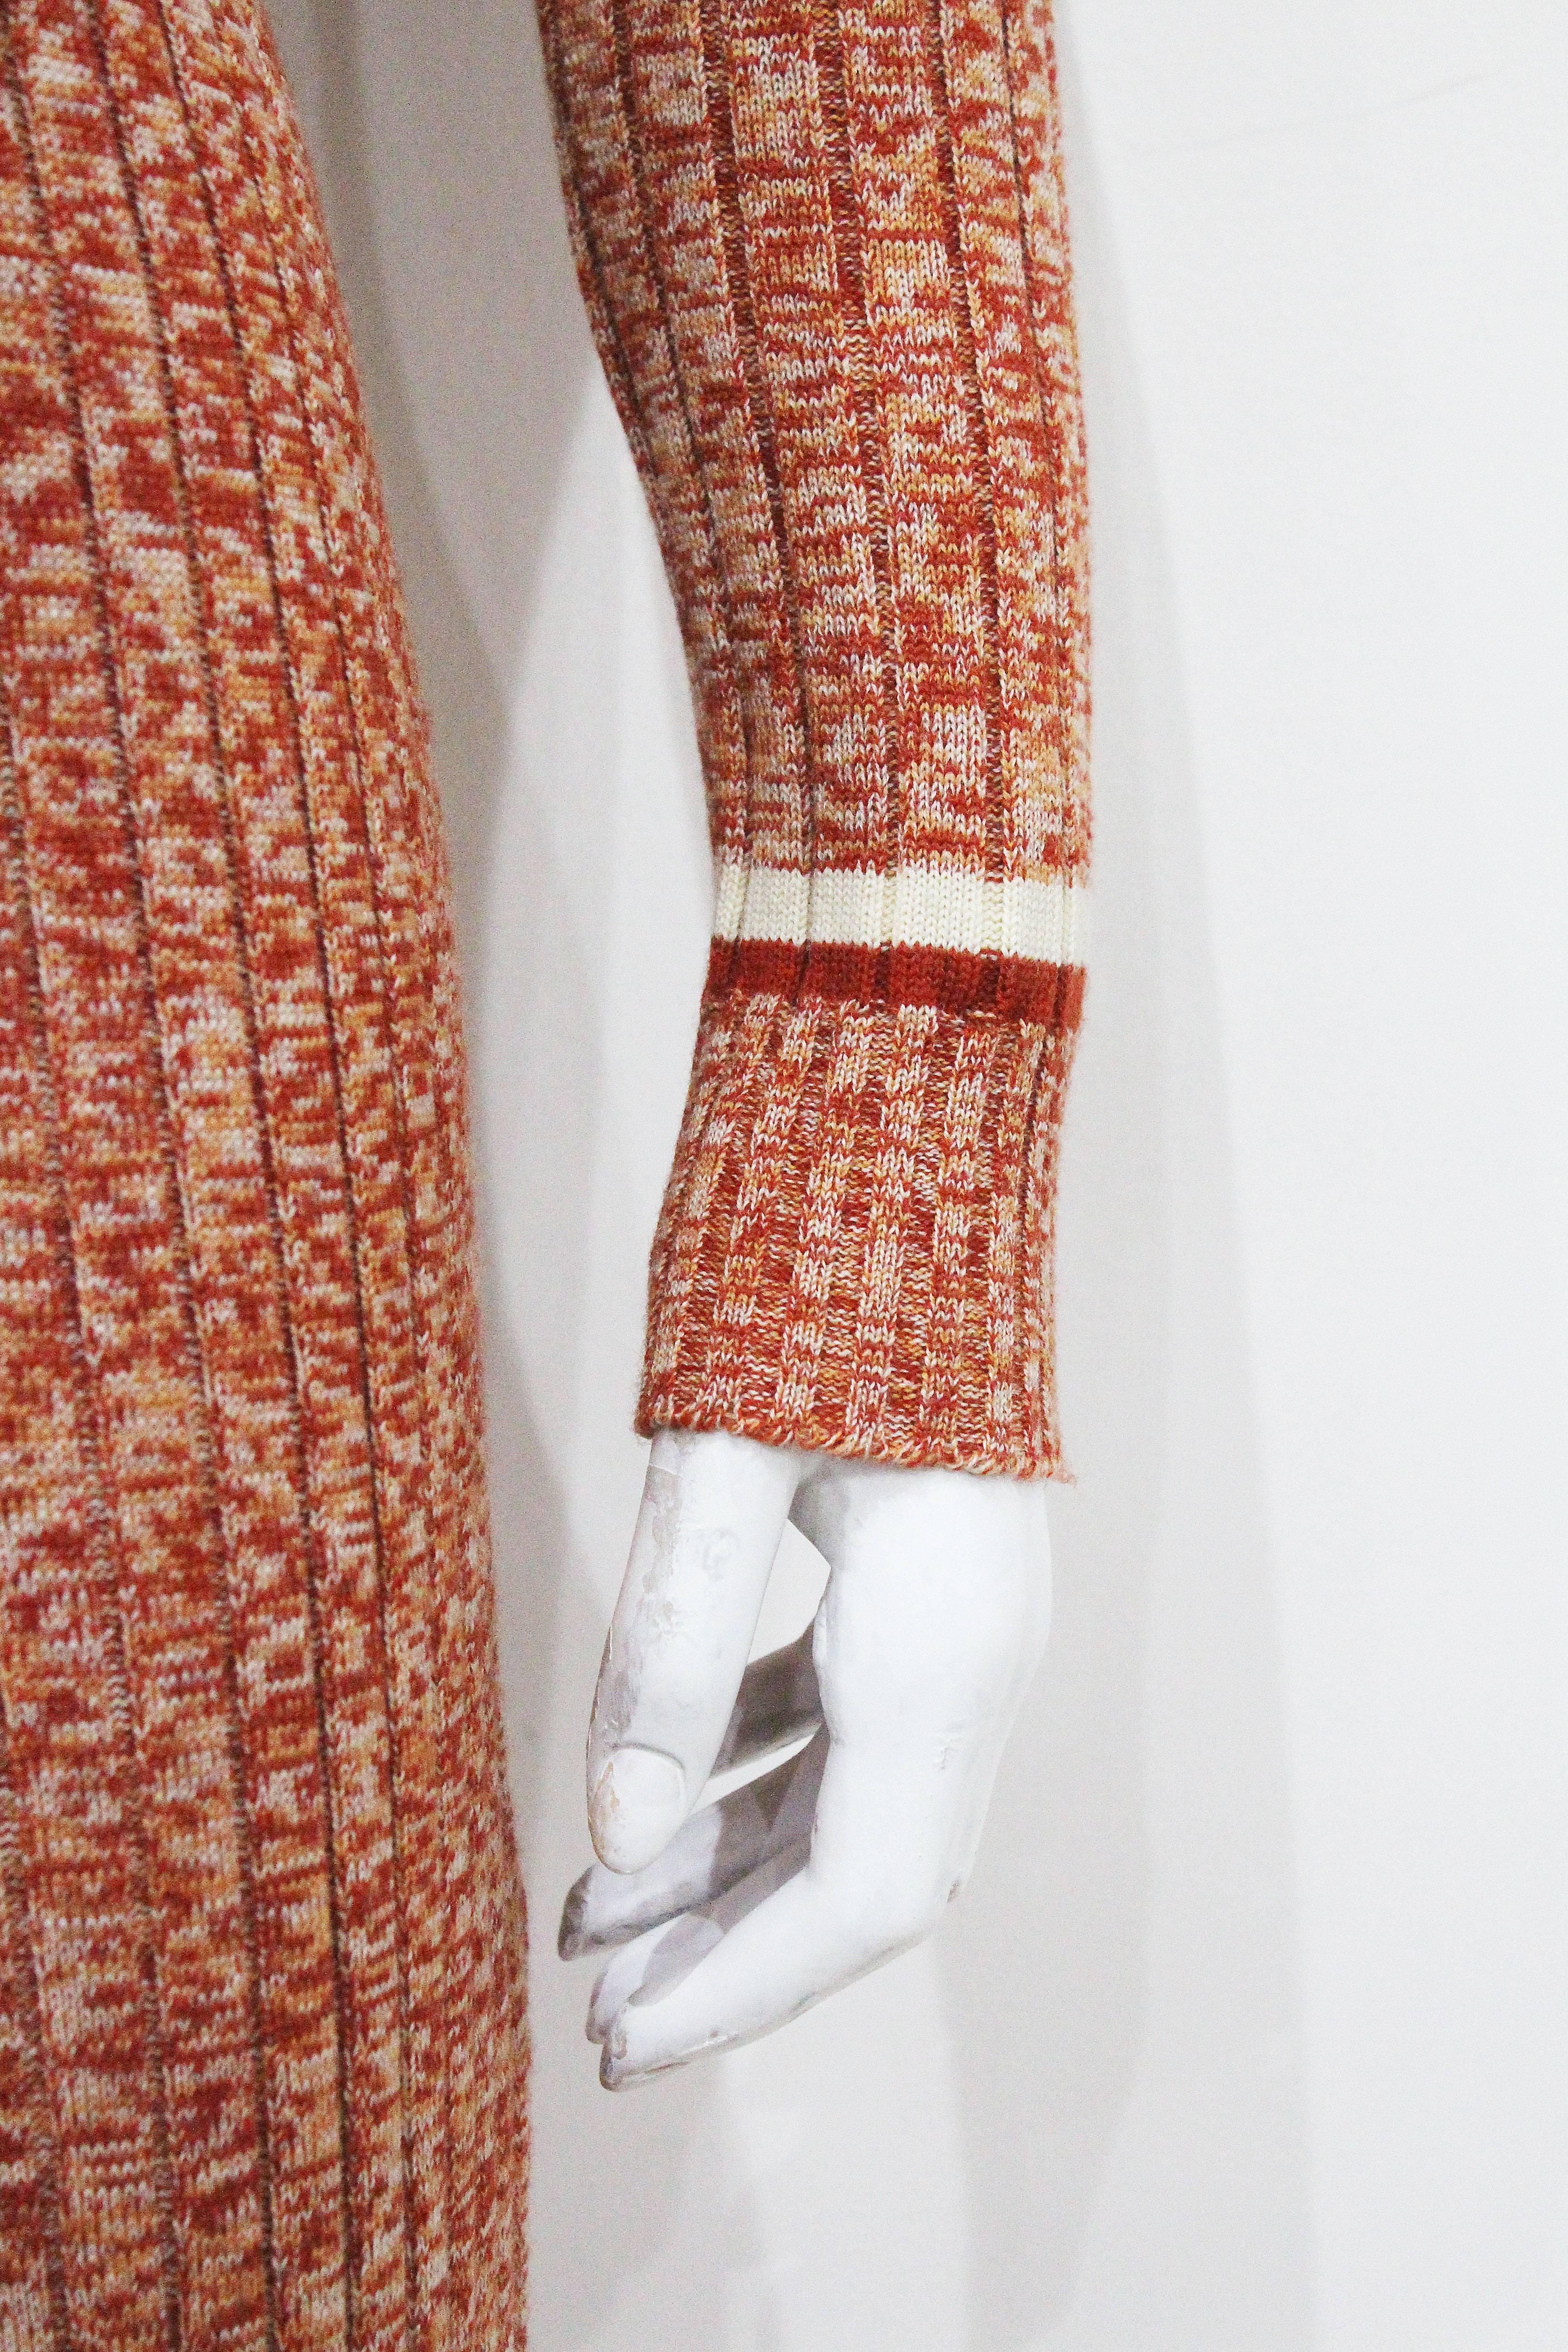 Brown Celine nautical style rib knit dress, c. 1970s